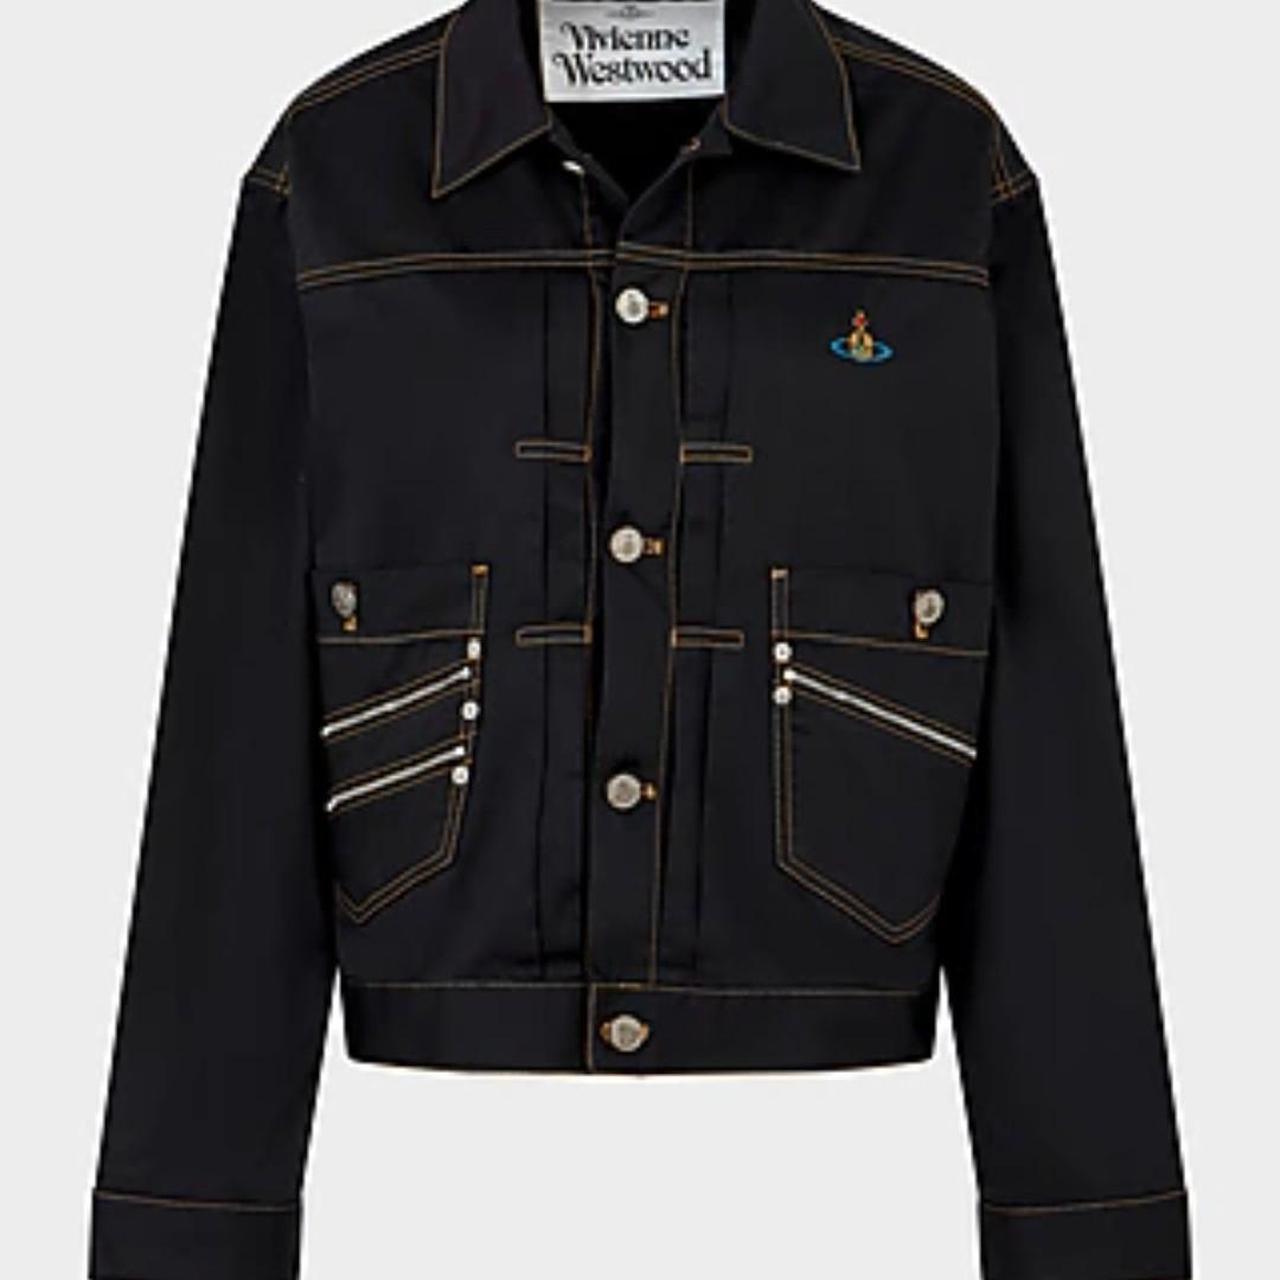 Brand New Vivienne Westwood Jacket; would love to... - Depop